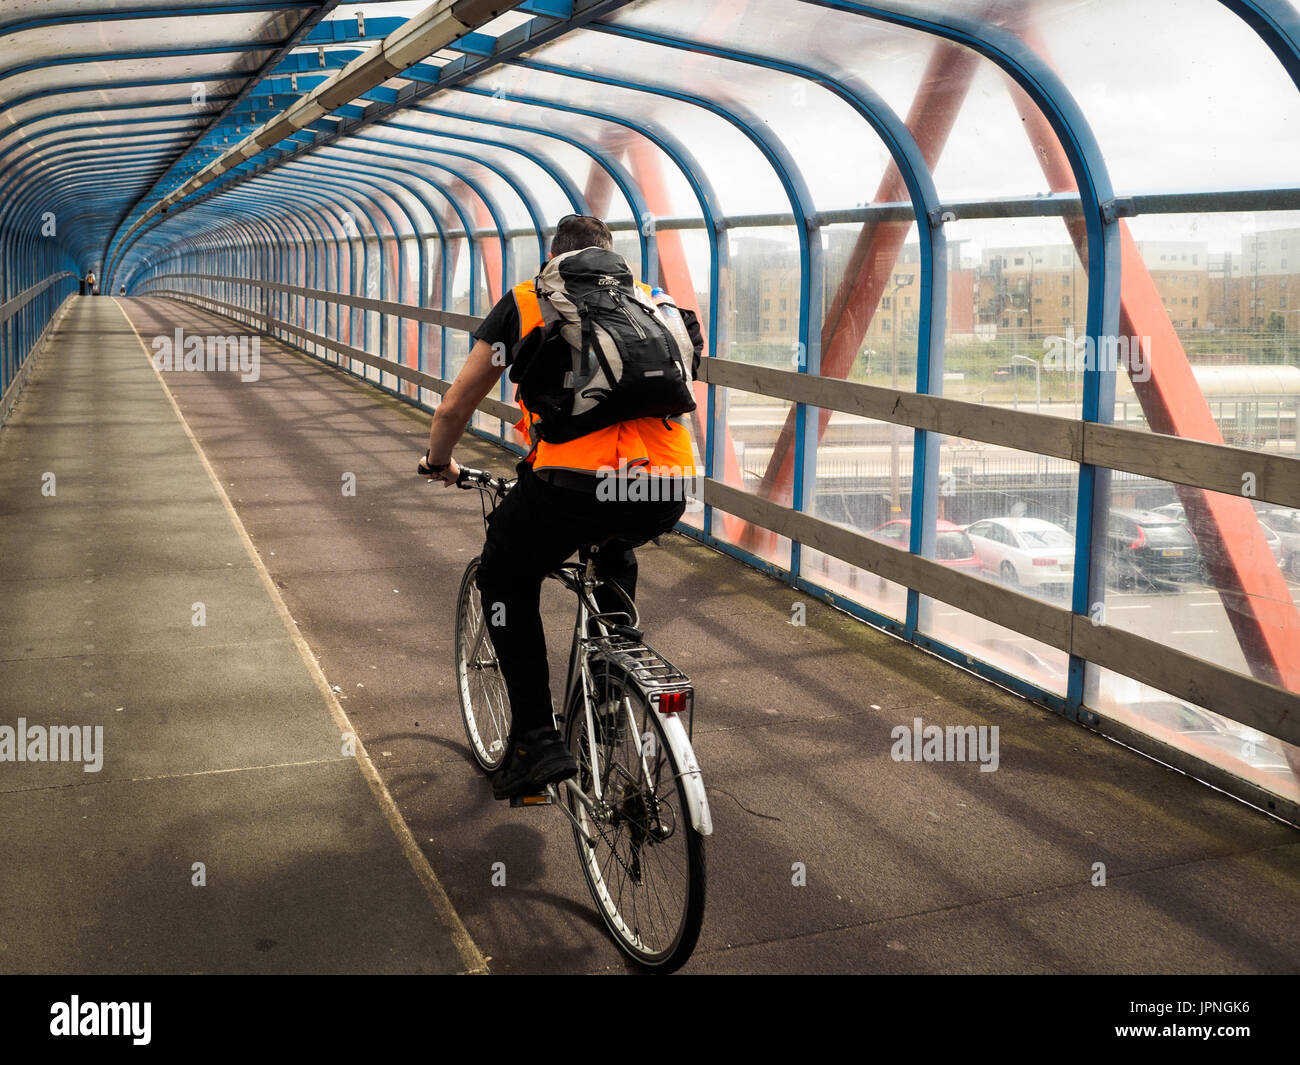 Cycling Bridge. Cyclist rides across the Tony Carter bridge, a cycle and pedestrian bridge crossing the main railway line in Cambridge UK Stock Photo